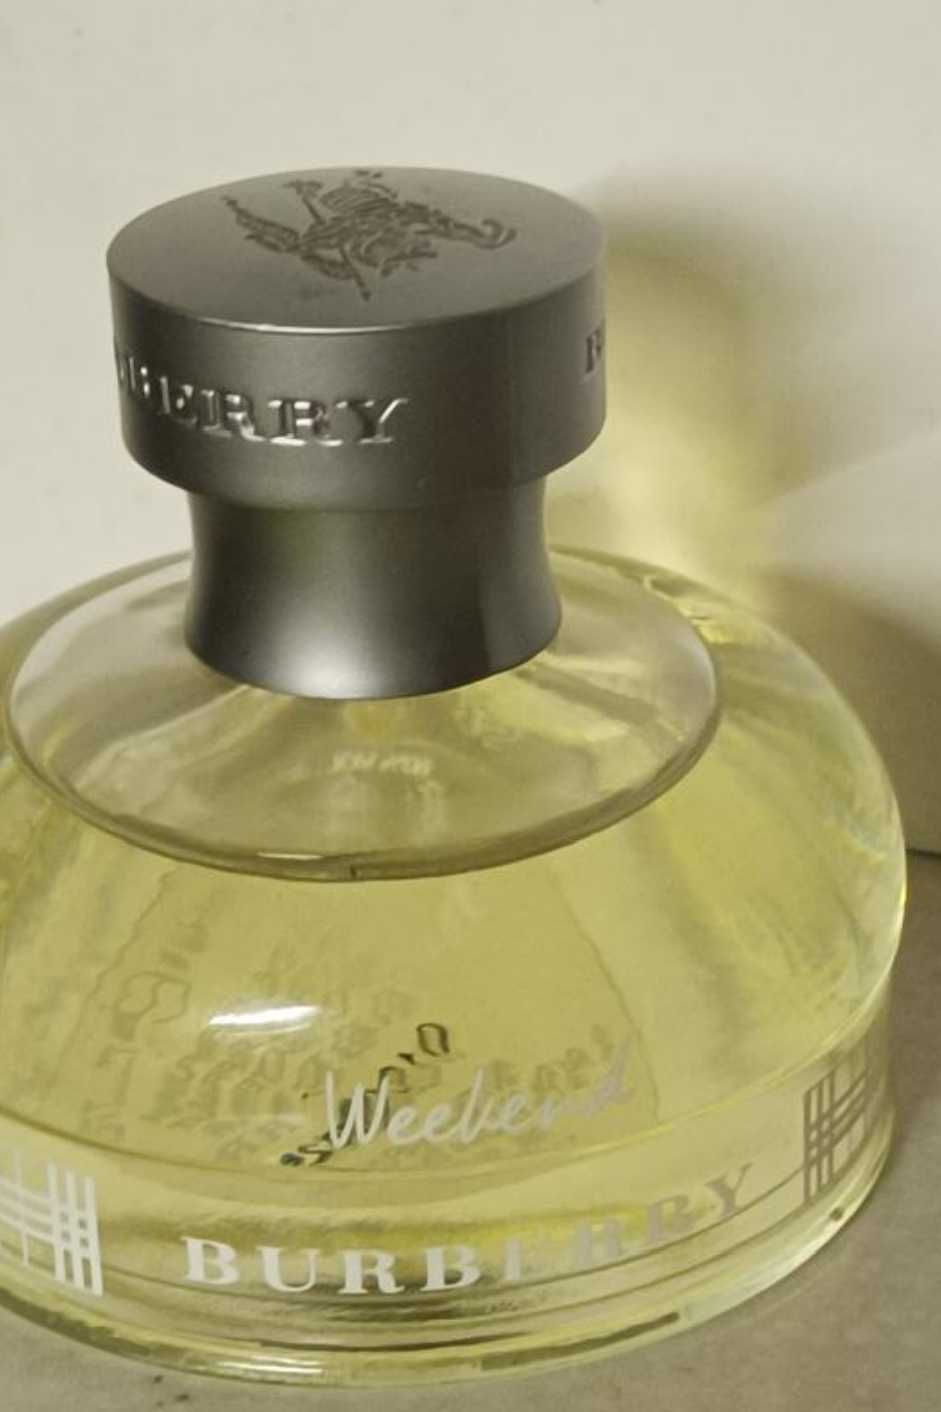 Burberry weekend parfum 50 ml Оригинал